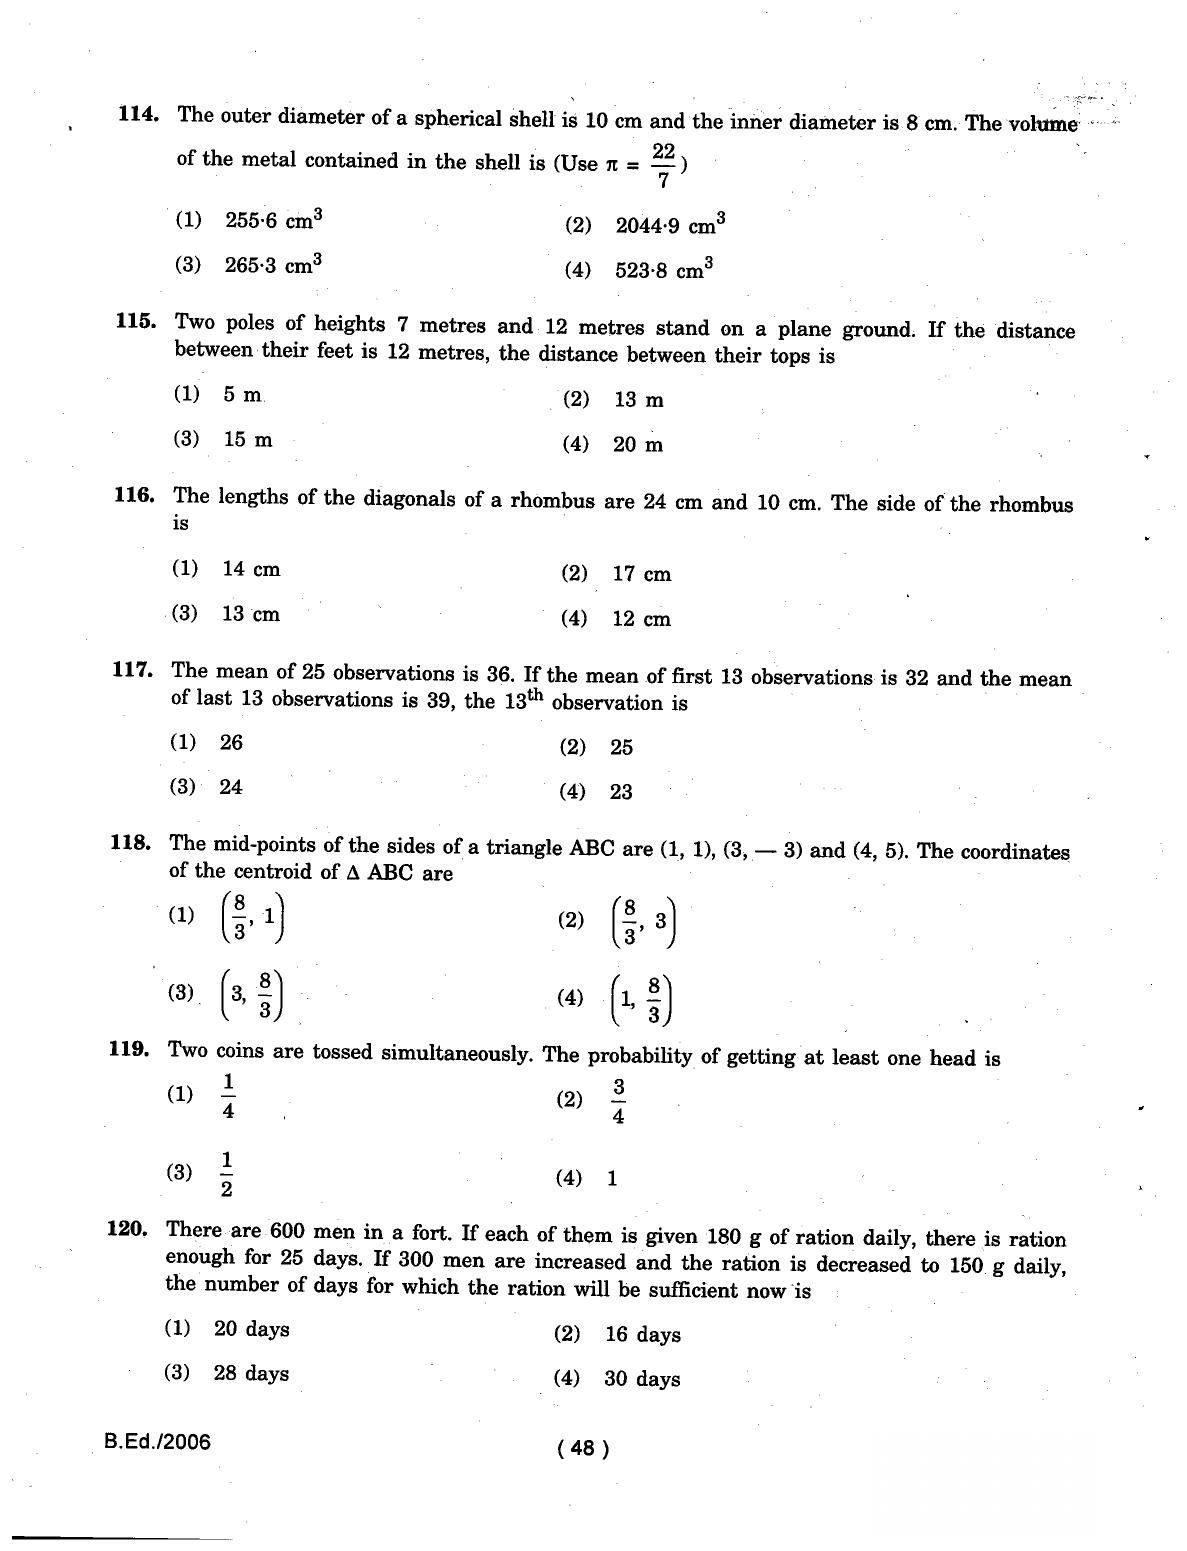 IGNOU B.Ed 2006 Question Paper - Page 48